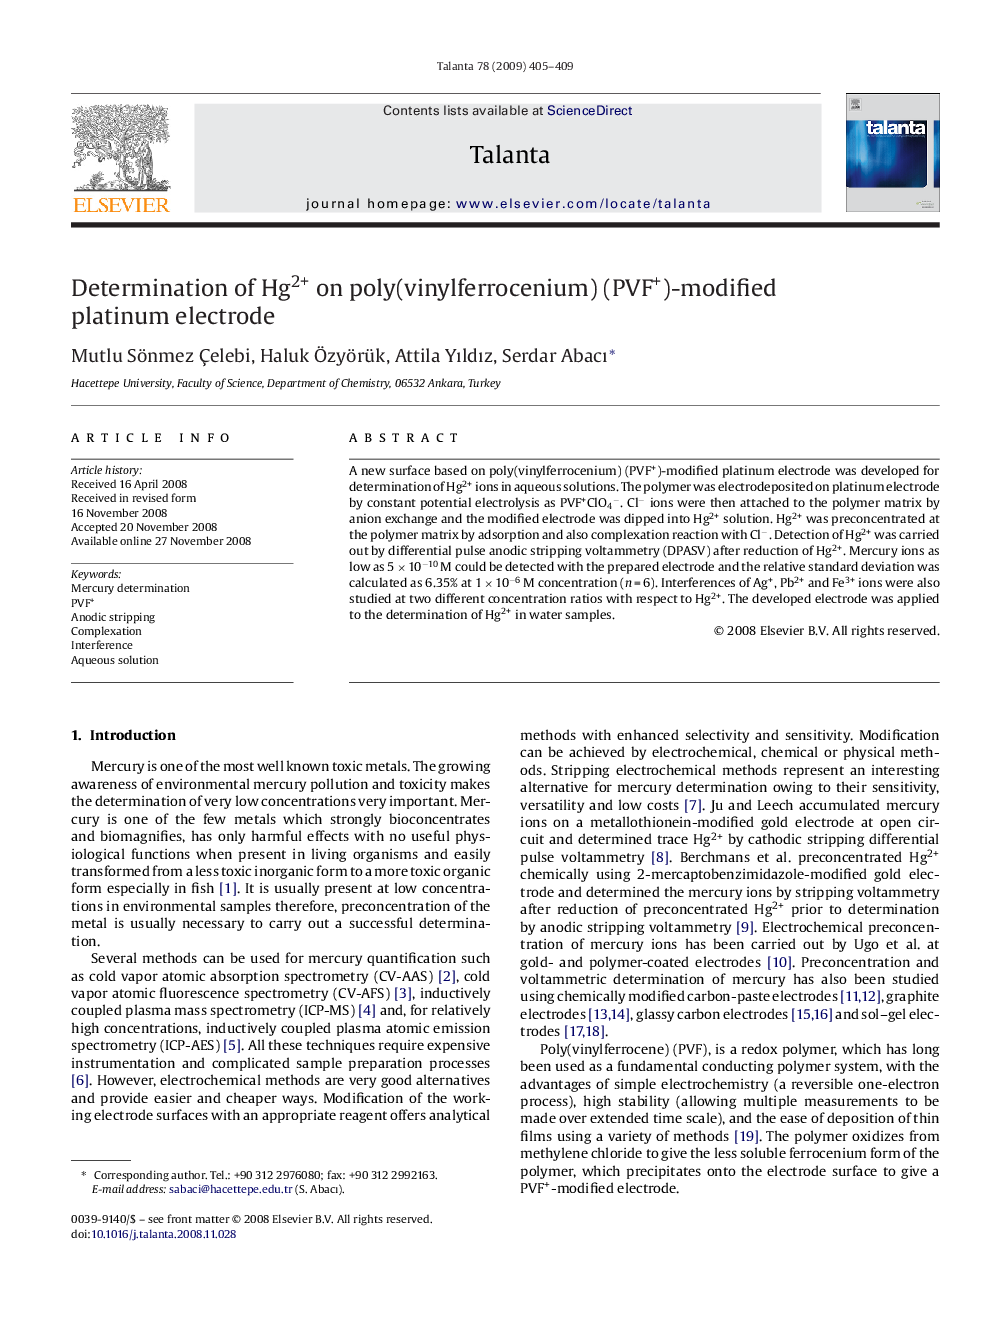 Determination of Hg2+ on poly(vinylferrocenium) (PVF+)-modified platinum electrode